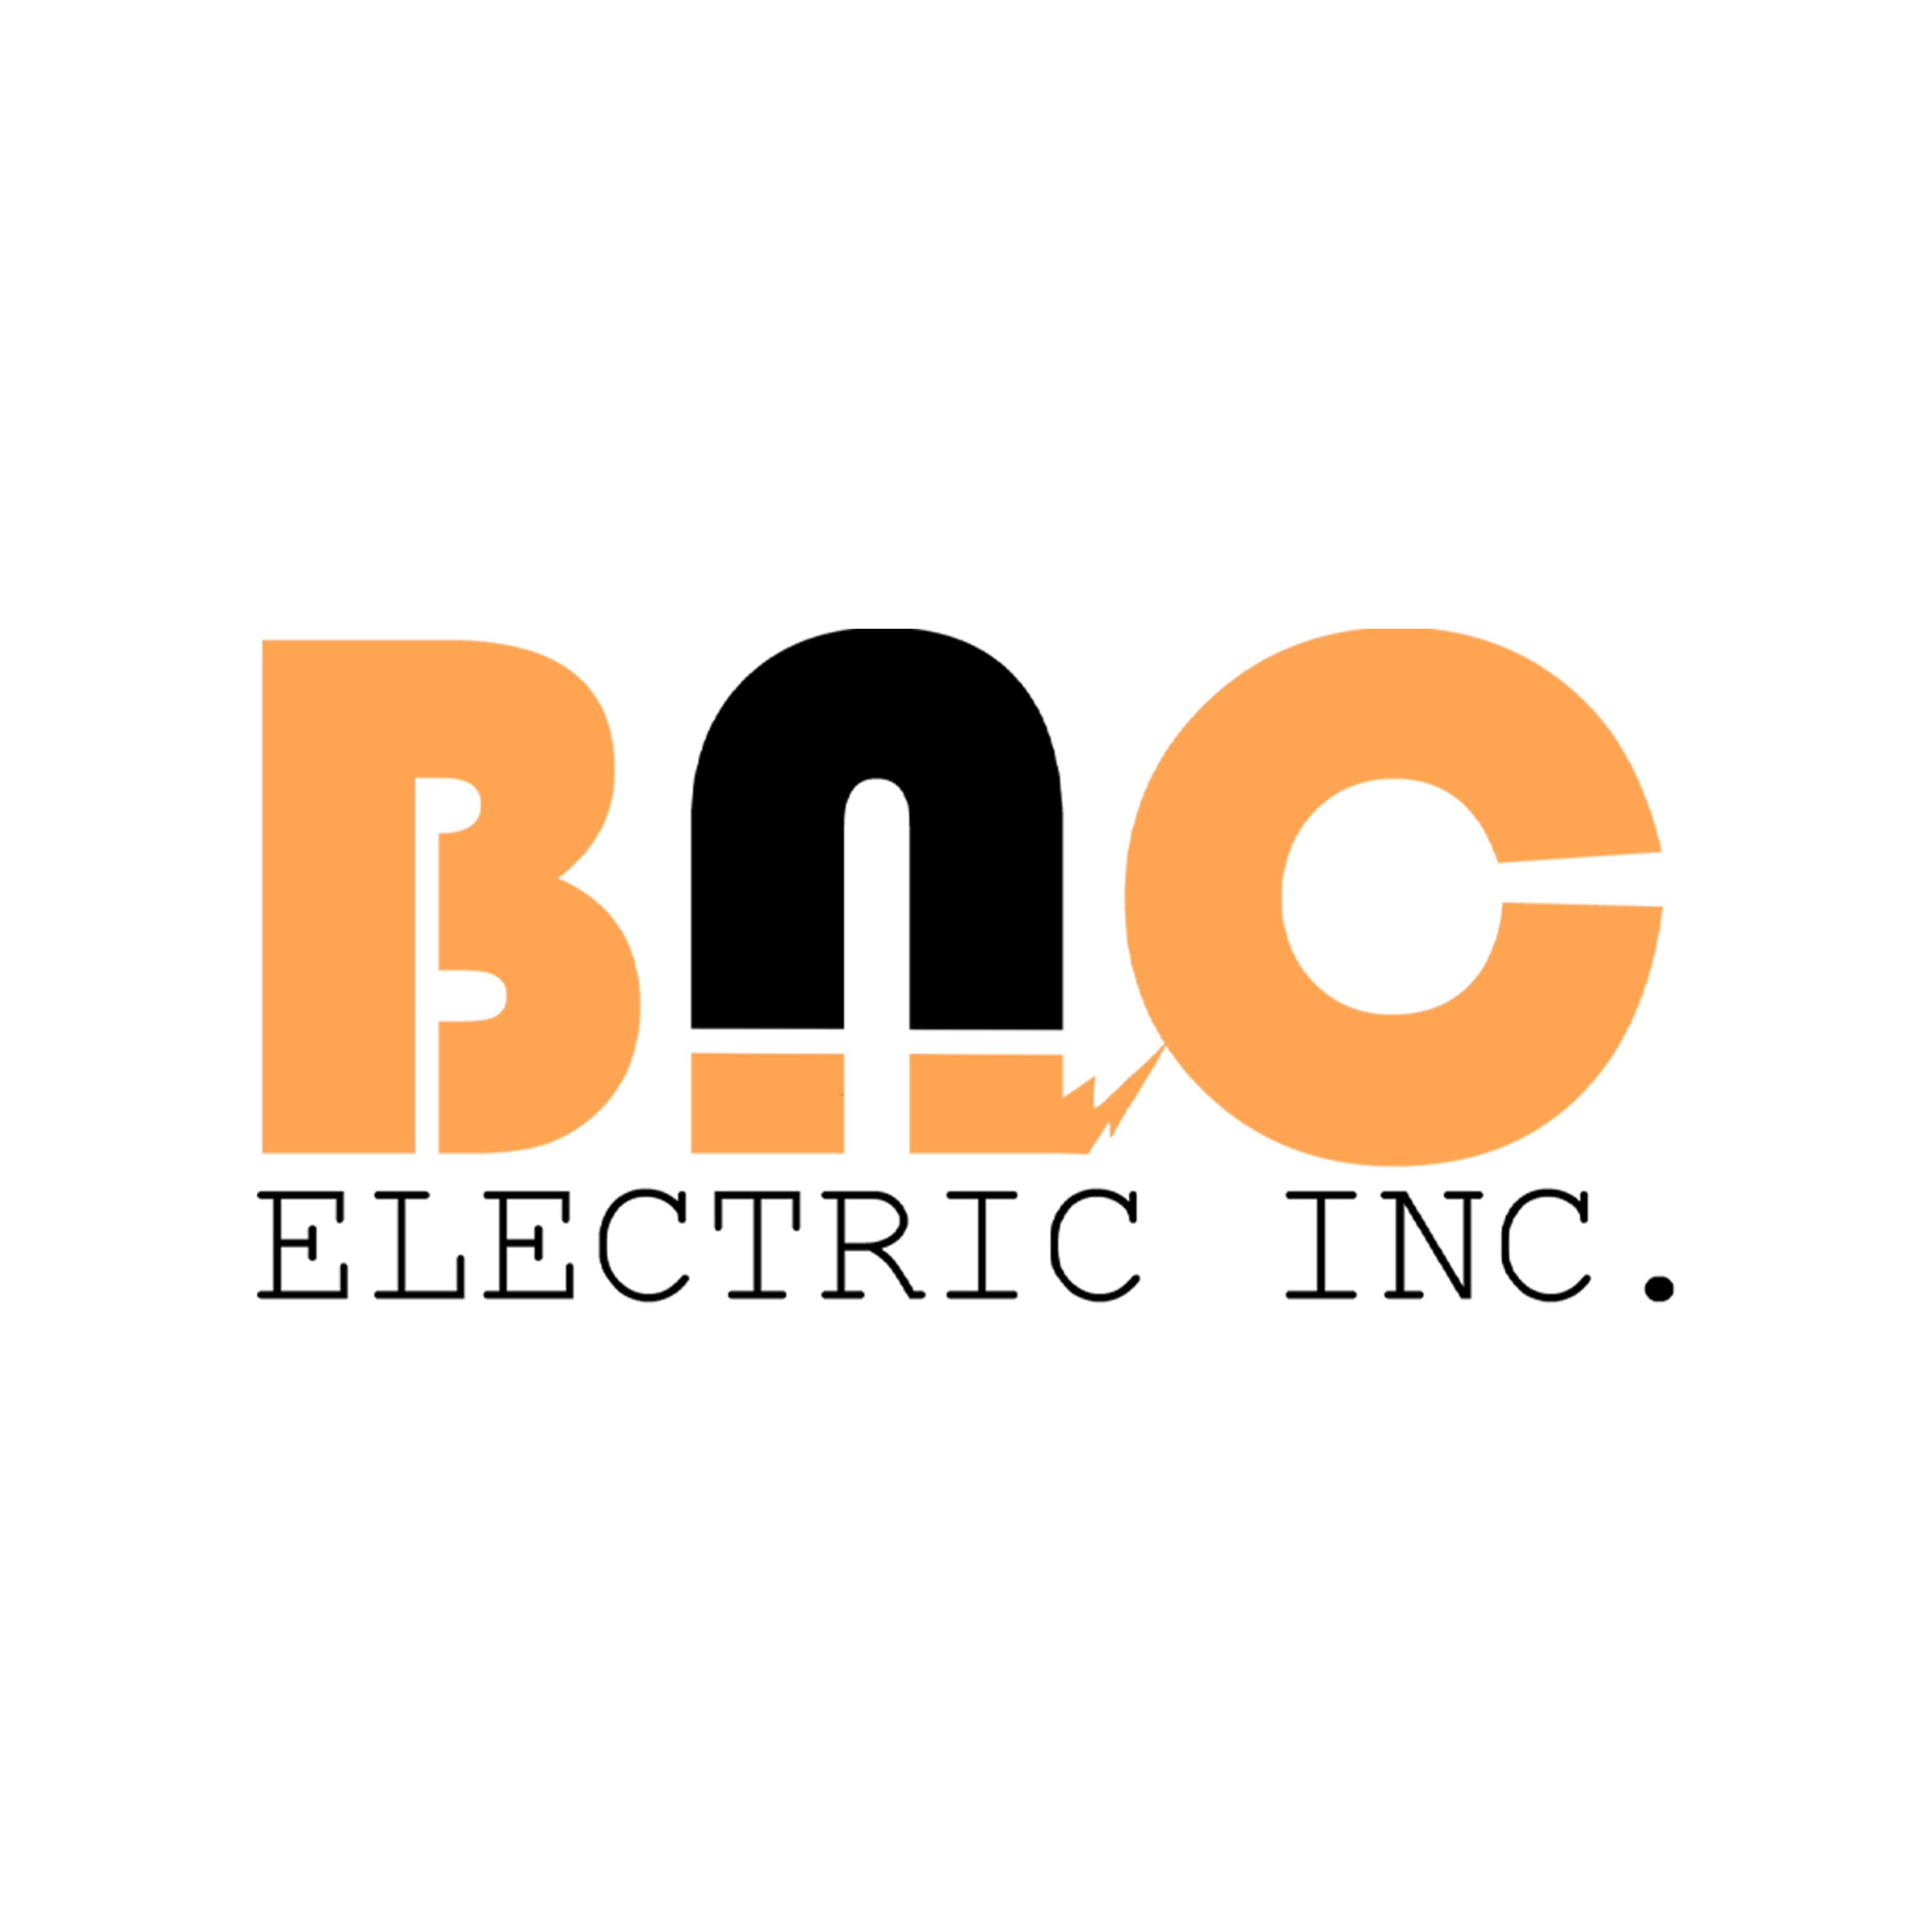 BNC ELECTRIC INC's logo